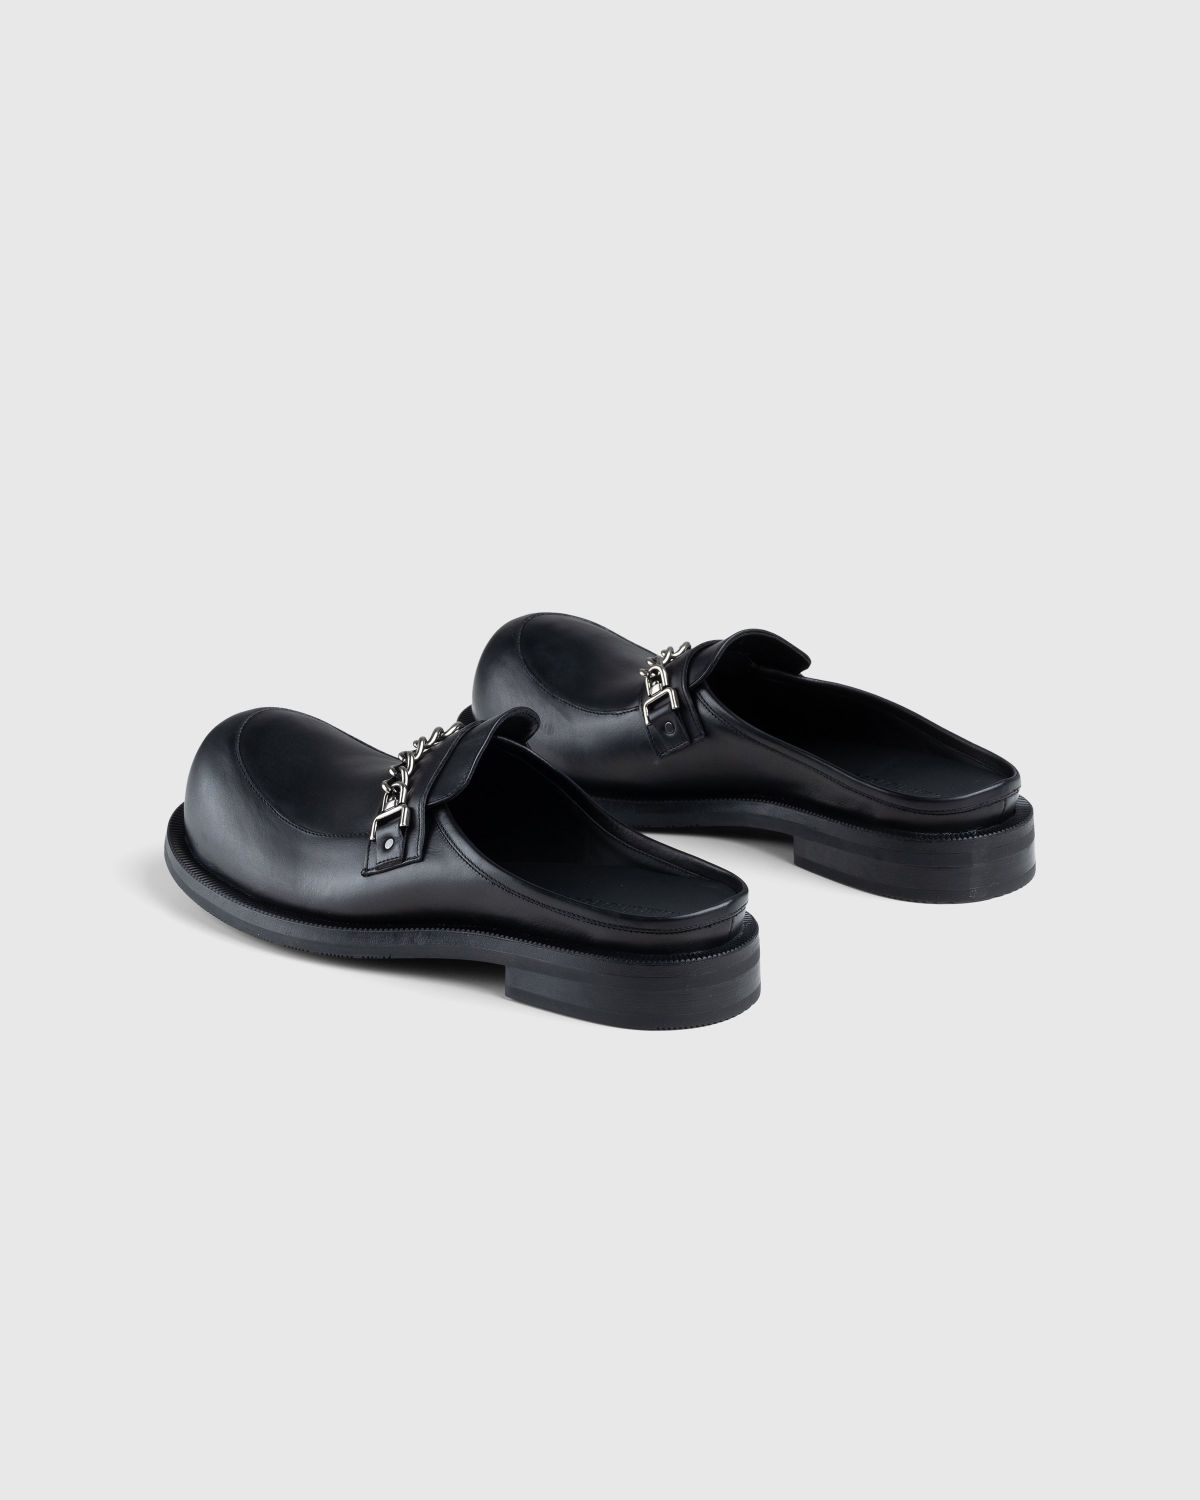 Martine Rose – Bulb Toe Chain Mule Black - Sandals - Black - Image 4